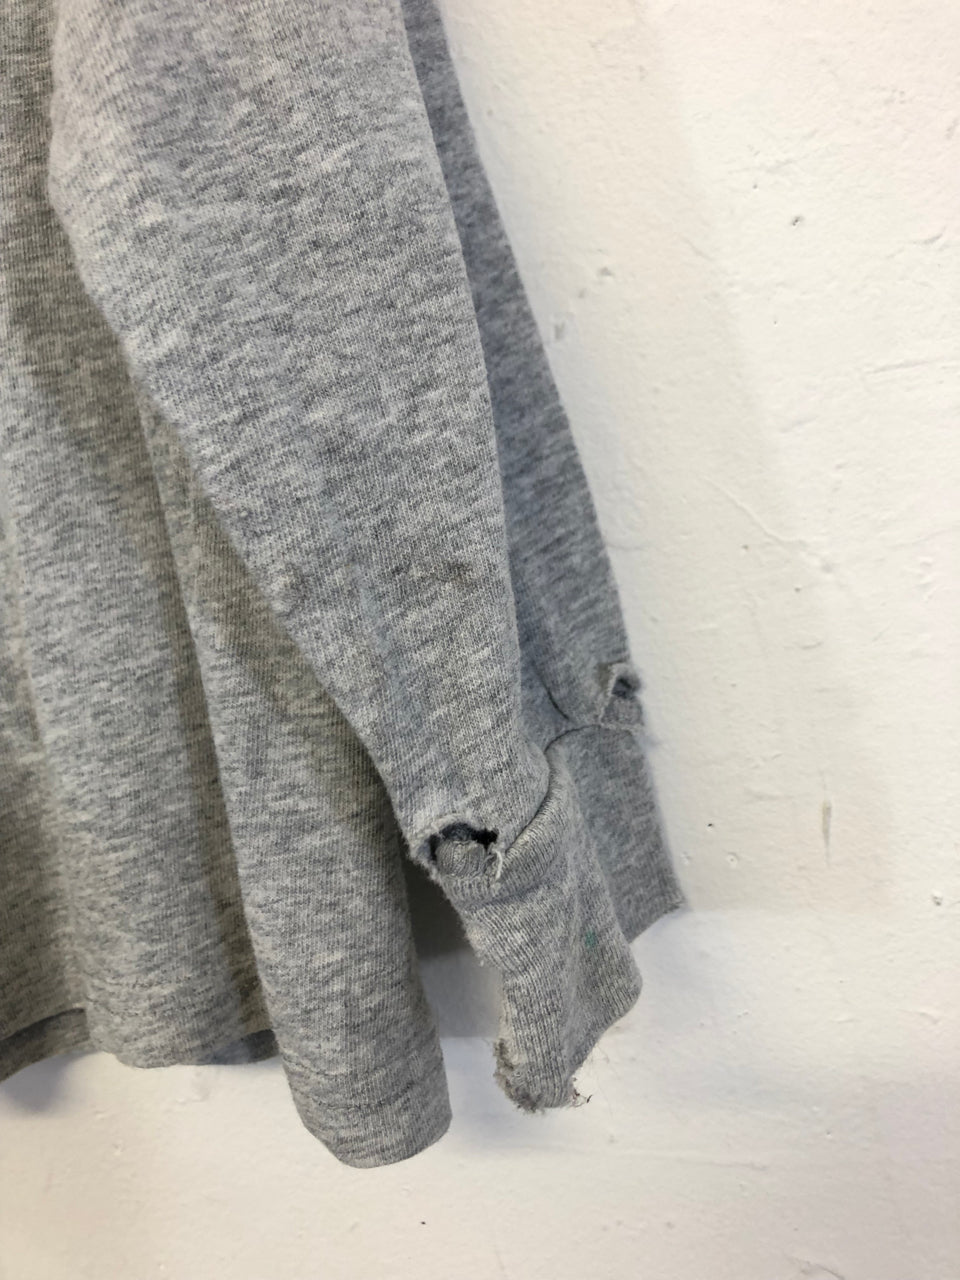 Kids' Grey Polo Sport Long-Sleeved T-Shirt